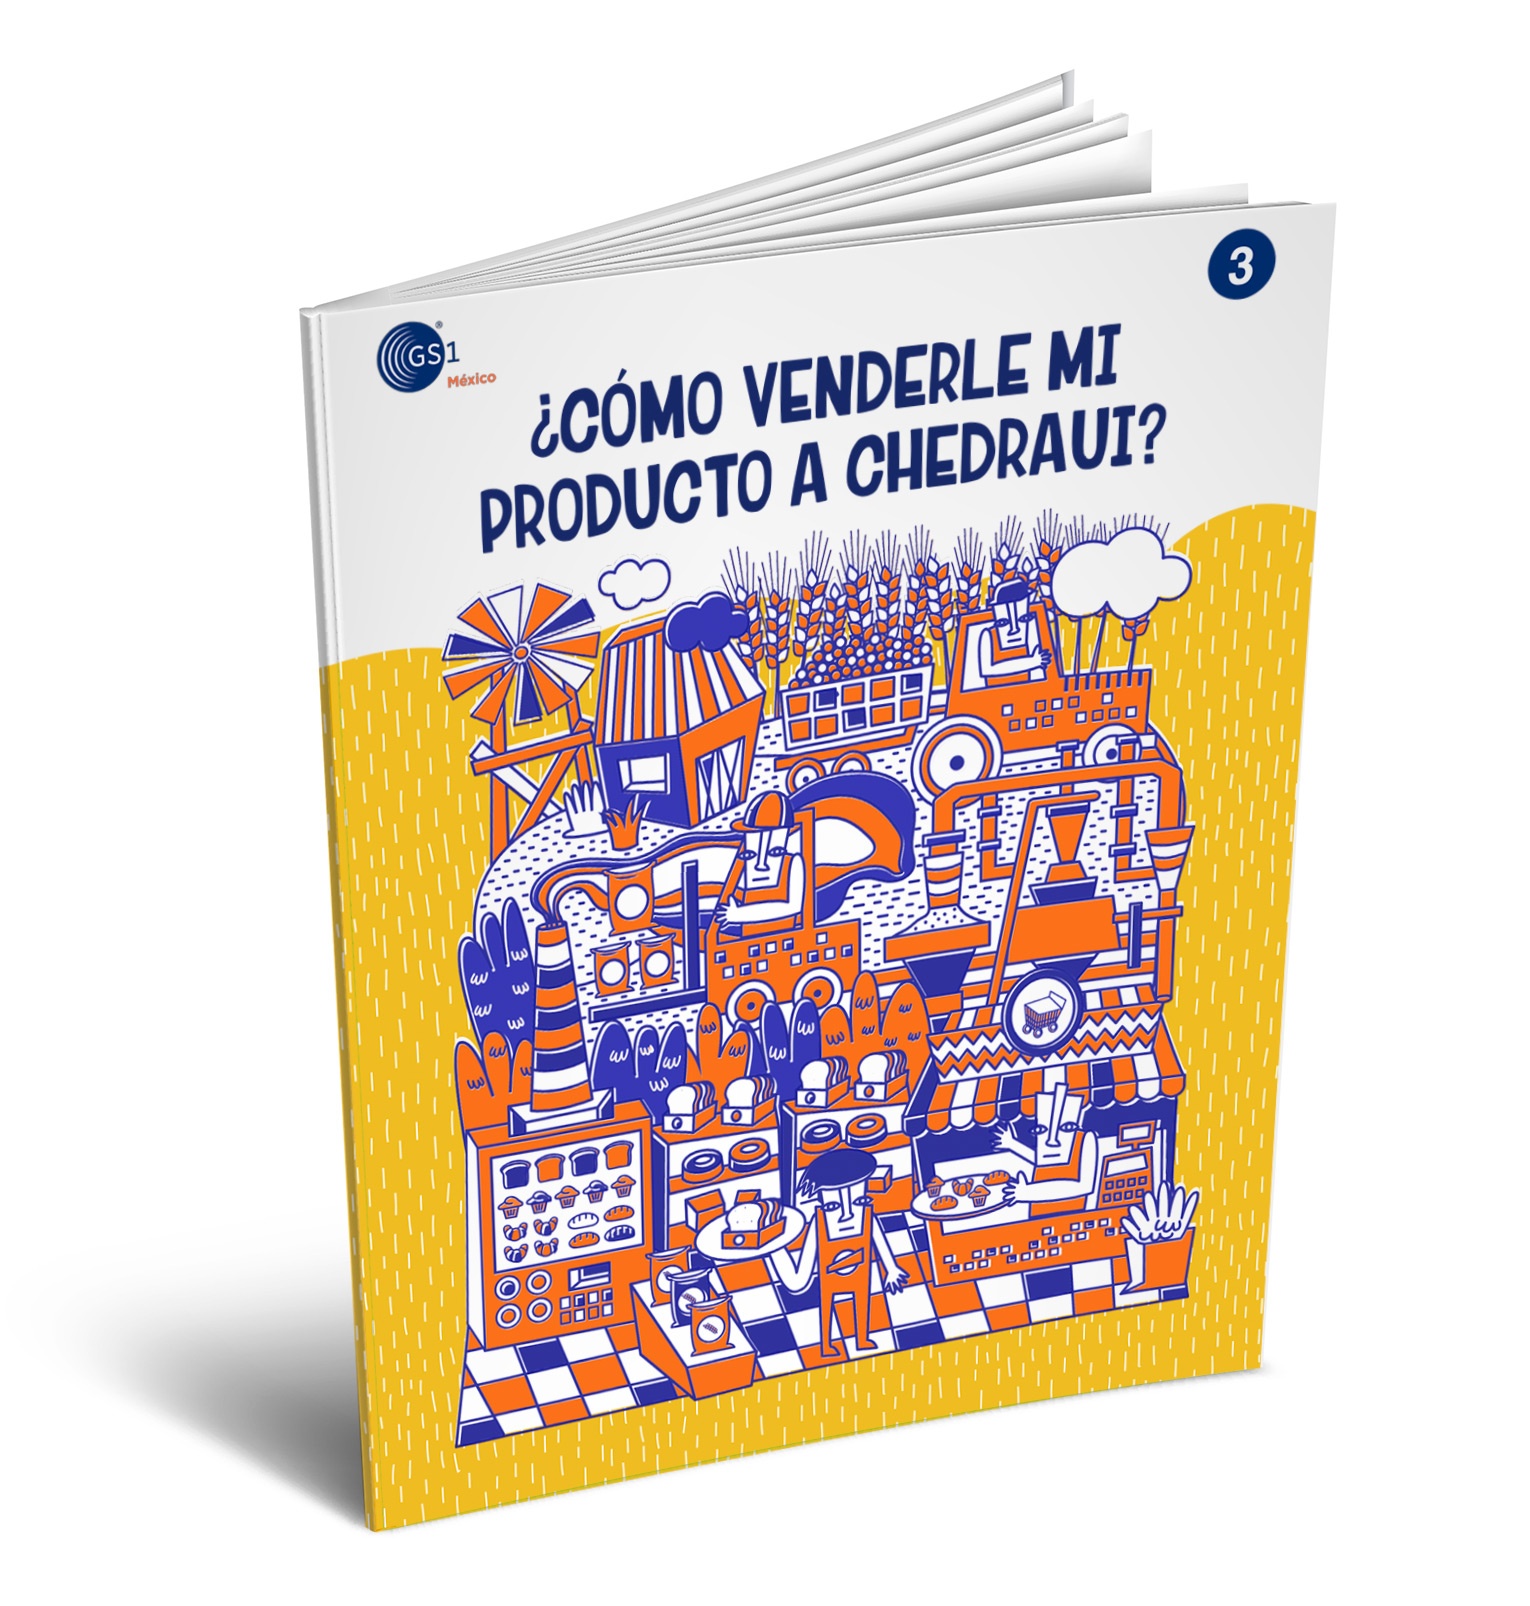 Portada Chedraui Cómo Venderle mi producto a Chedraui GS1 Mexico 2018.jpg